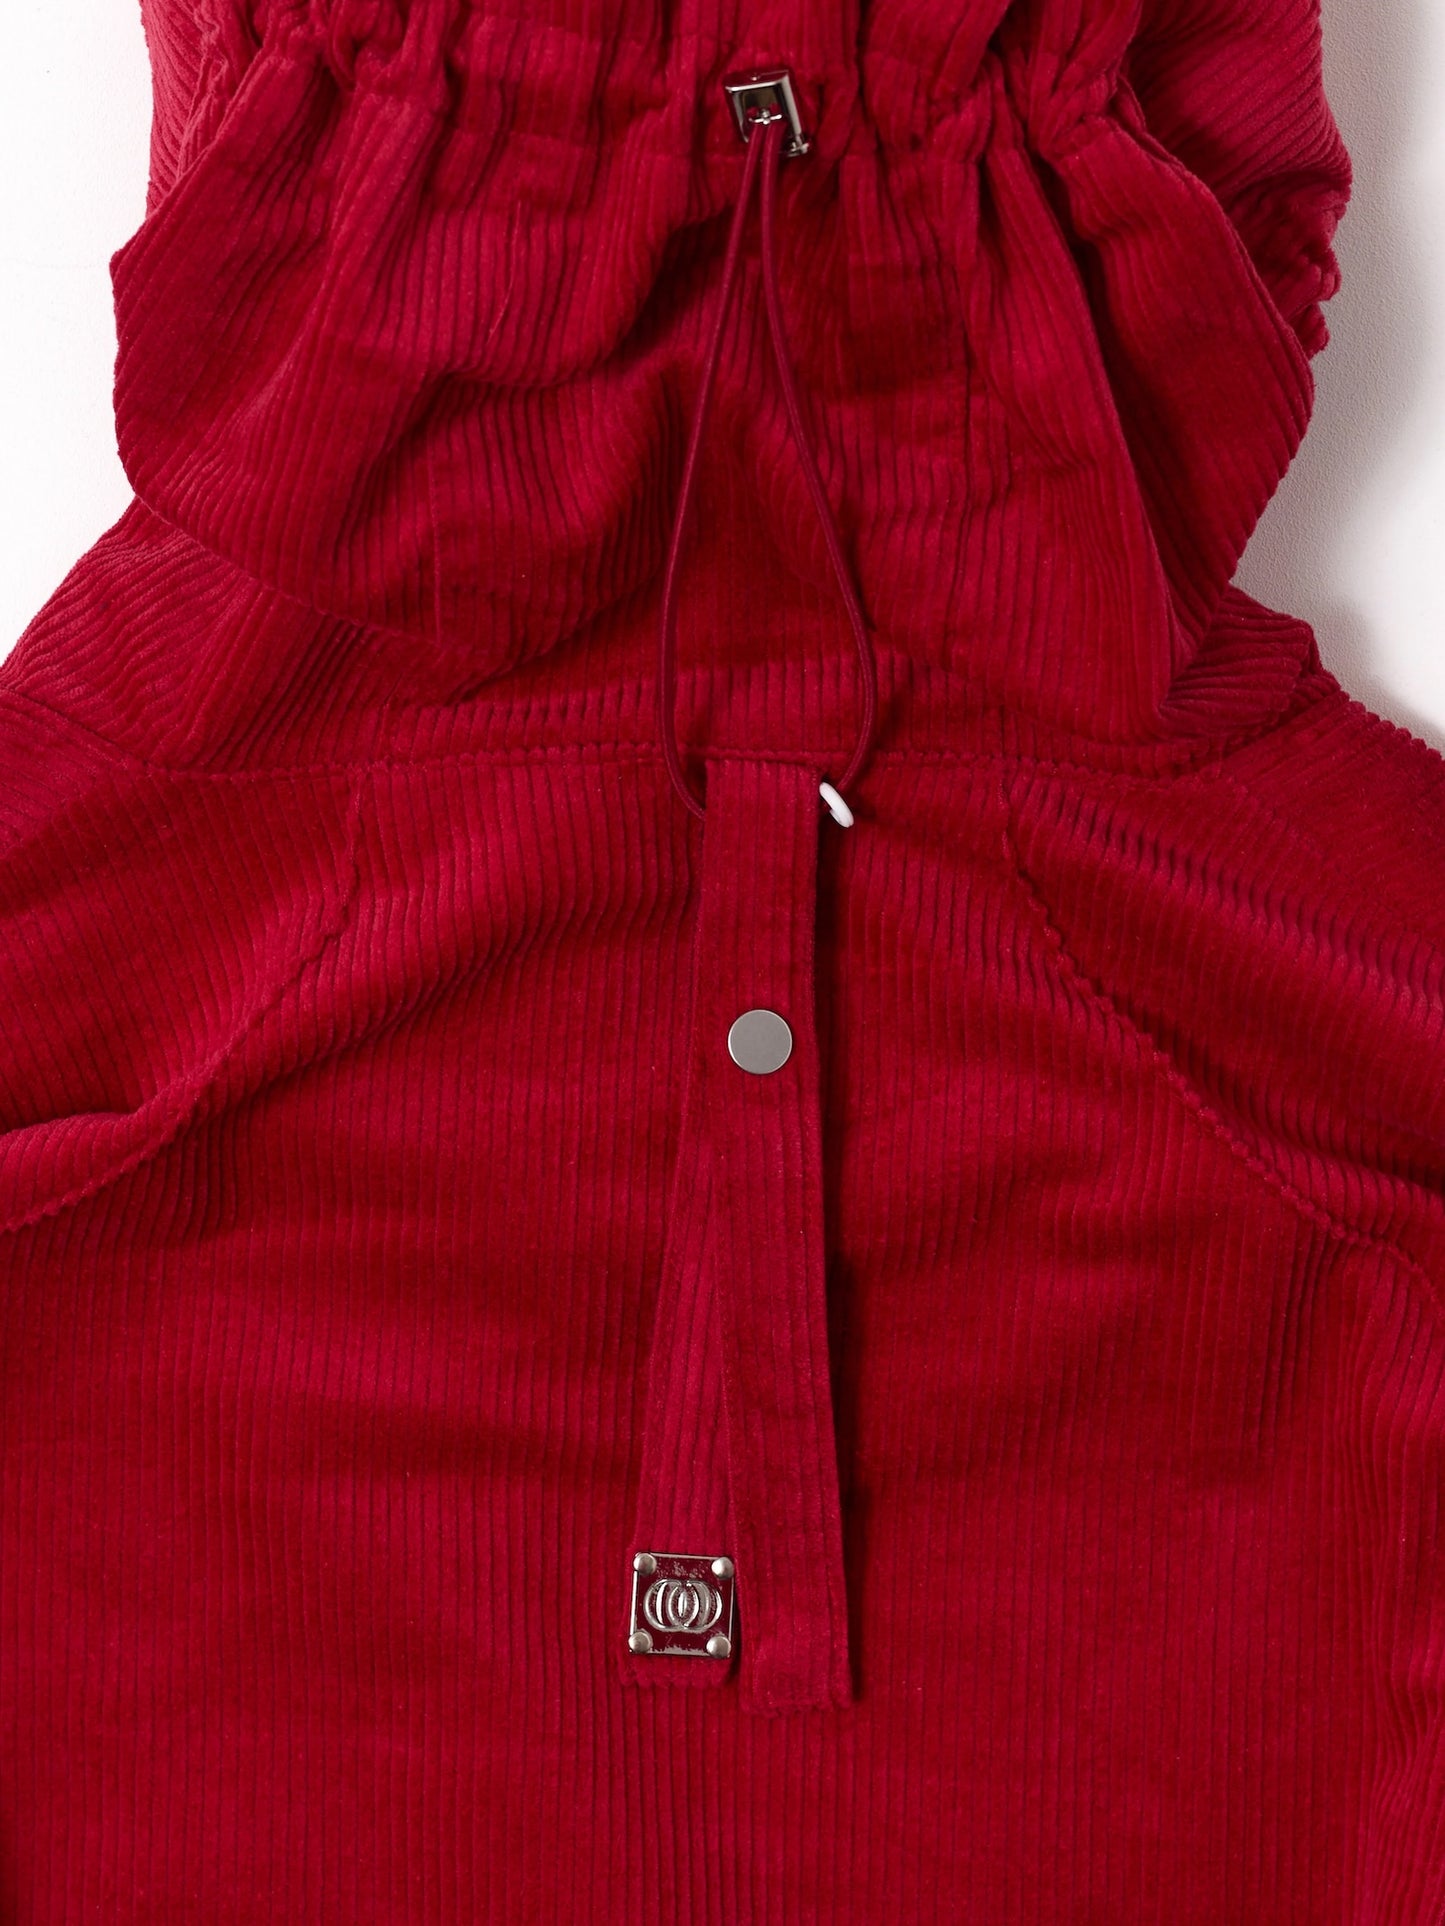 JD SsAX*om (A)t Anorak Jacket Red